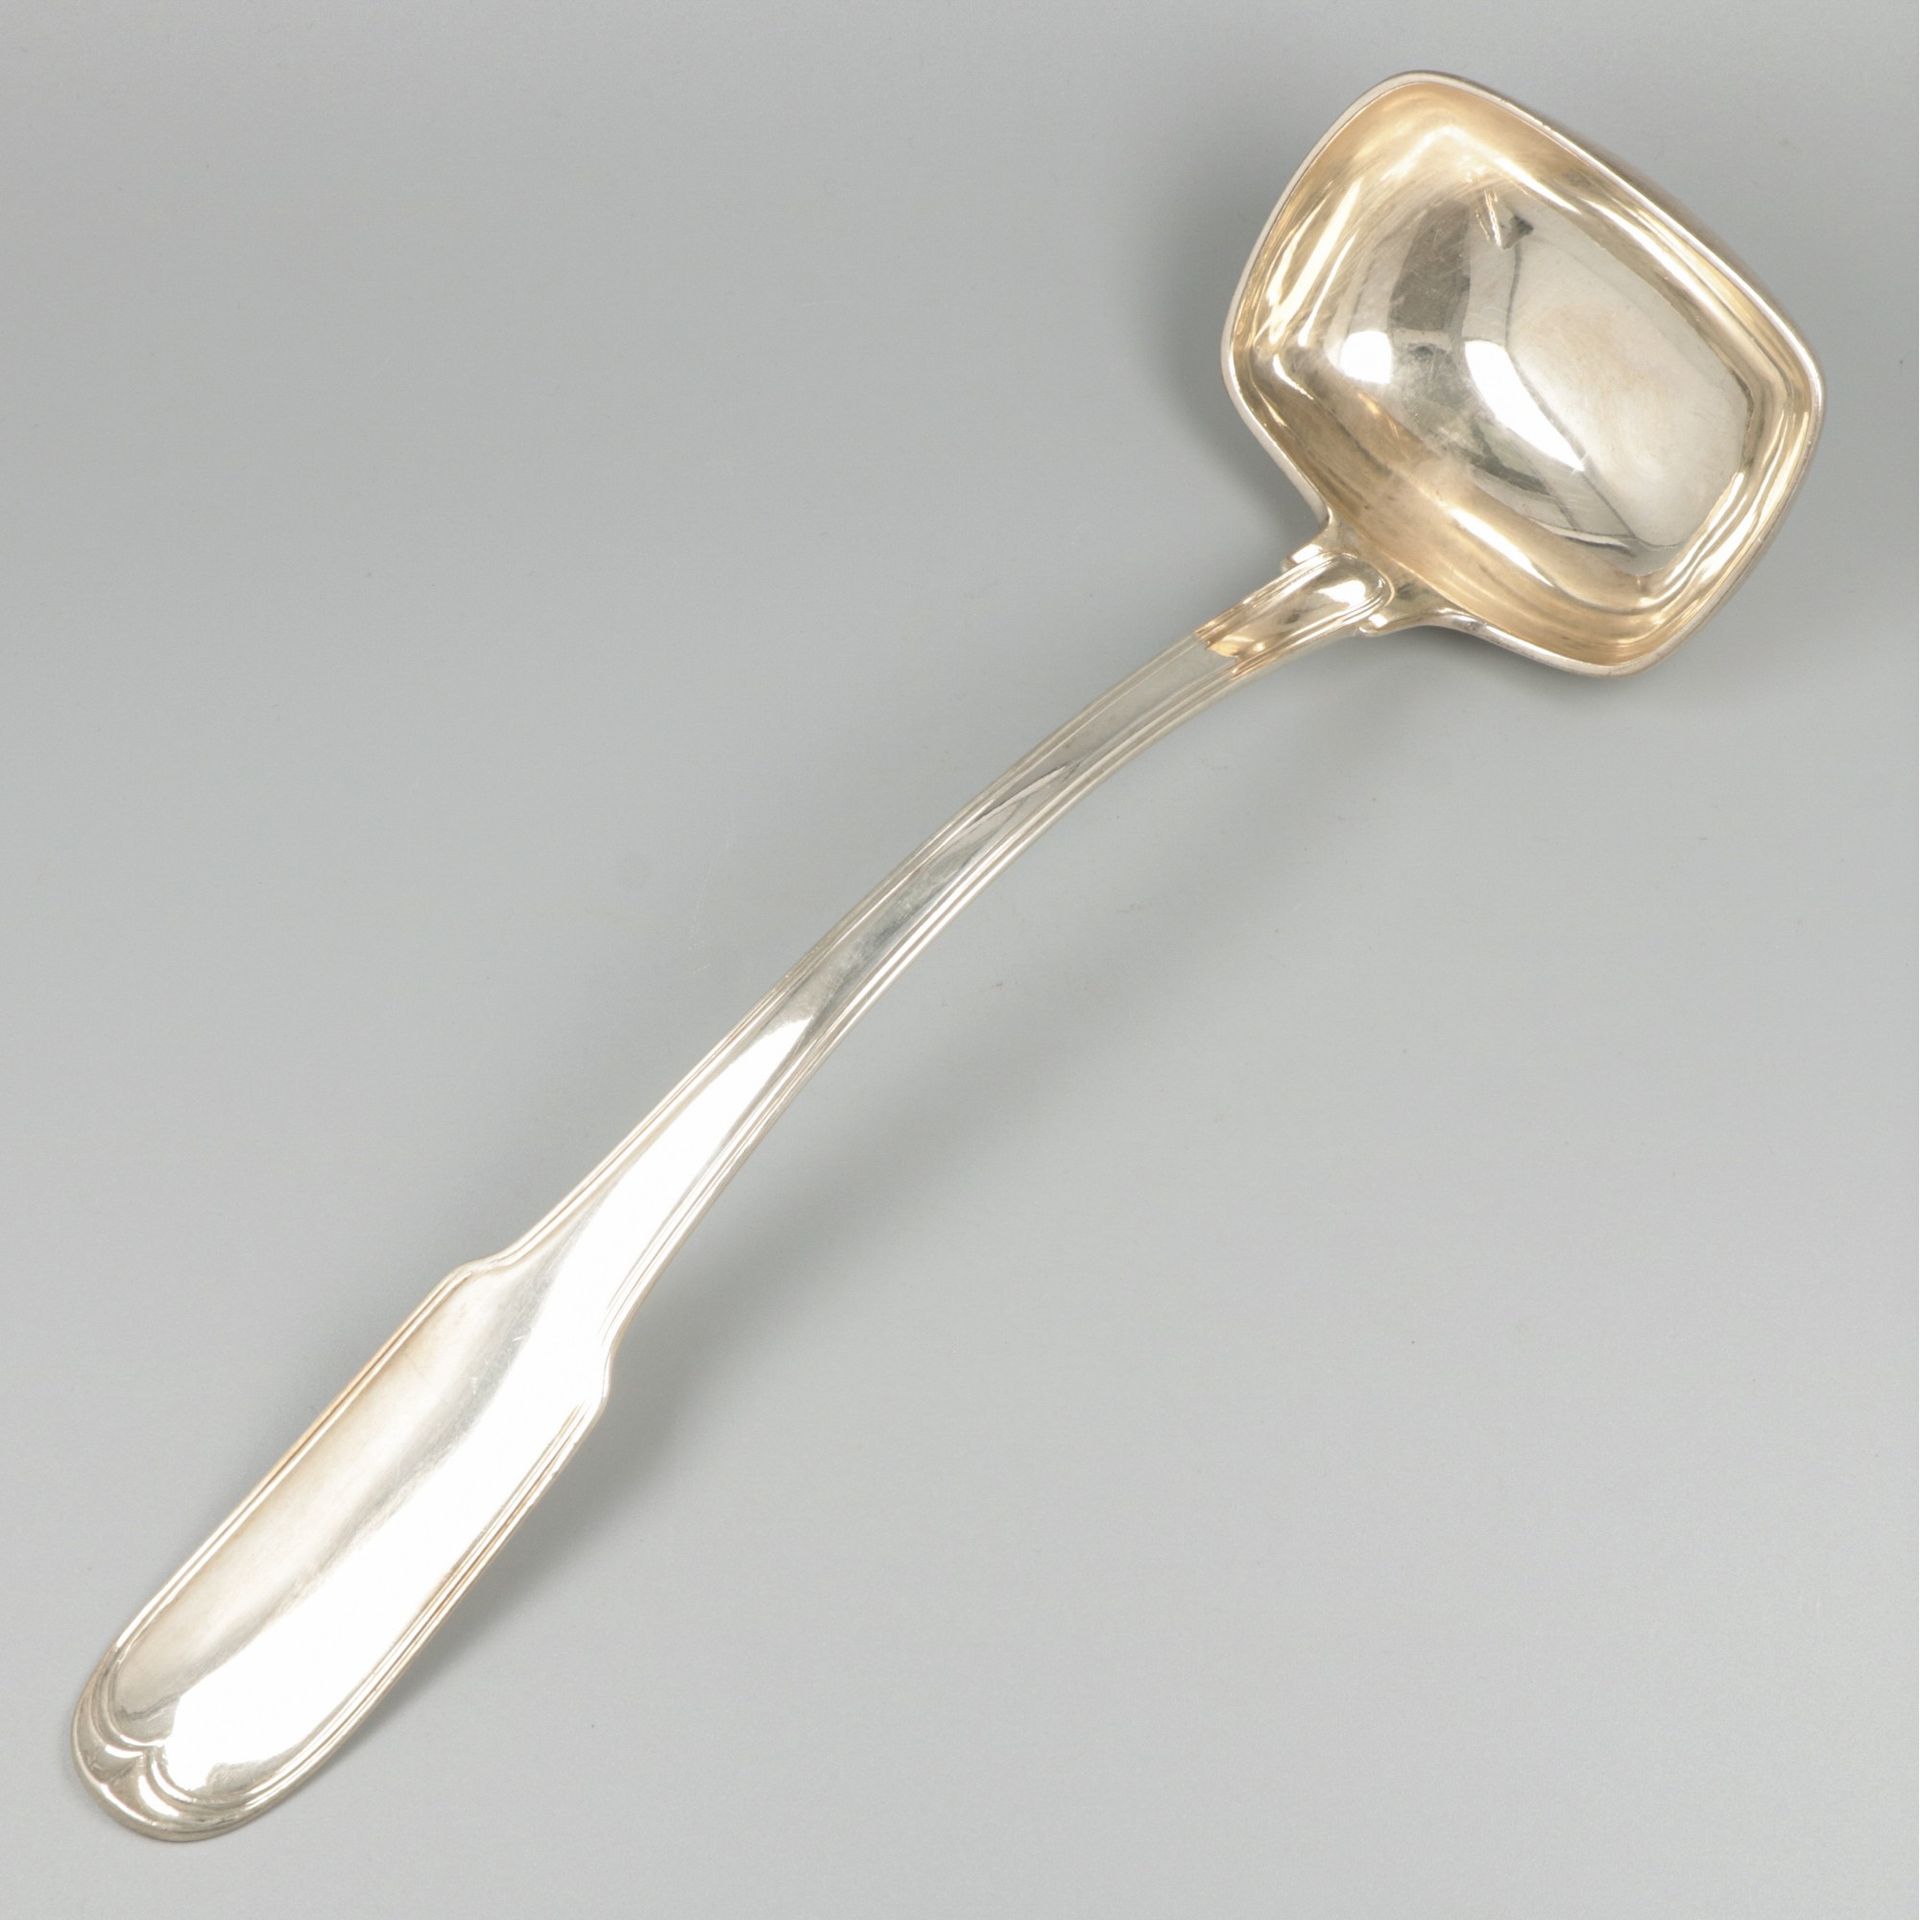 Soup ladle silver. Modelo grande con cuenco rectangular, "Hartfilet" o filete de&hellip;